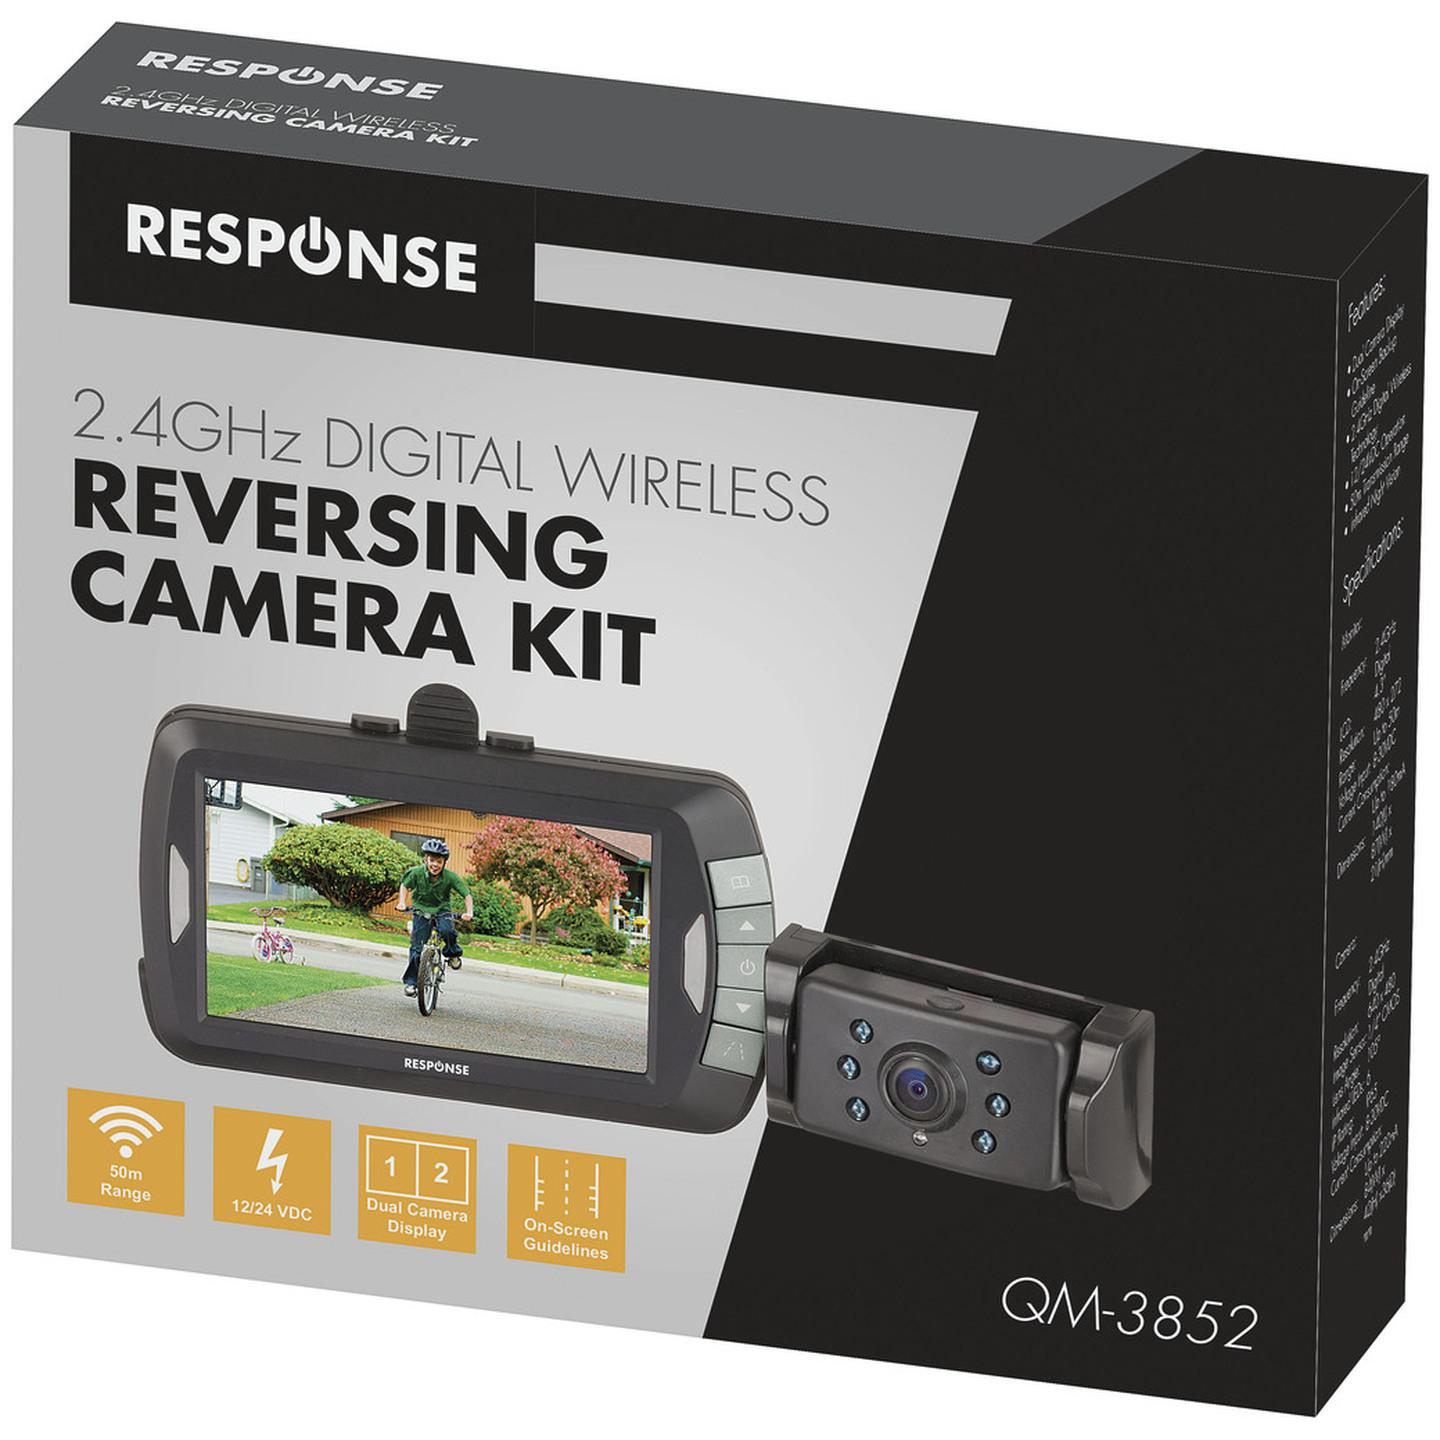 2.4GHZ Digital Wireless Reversing Camera